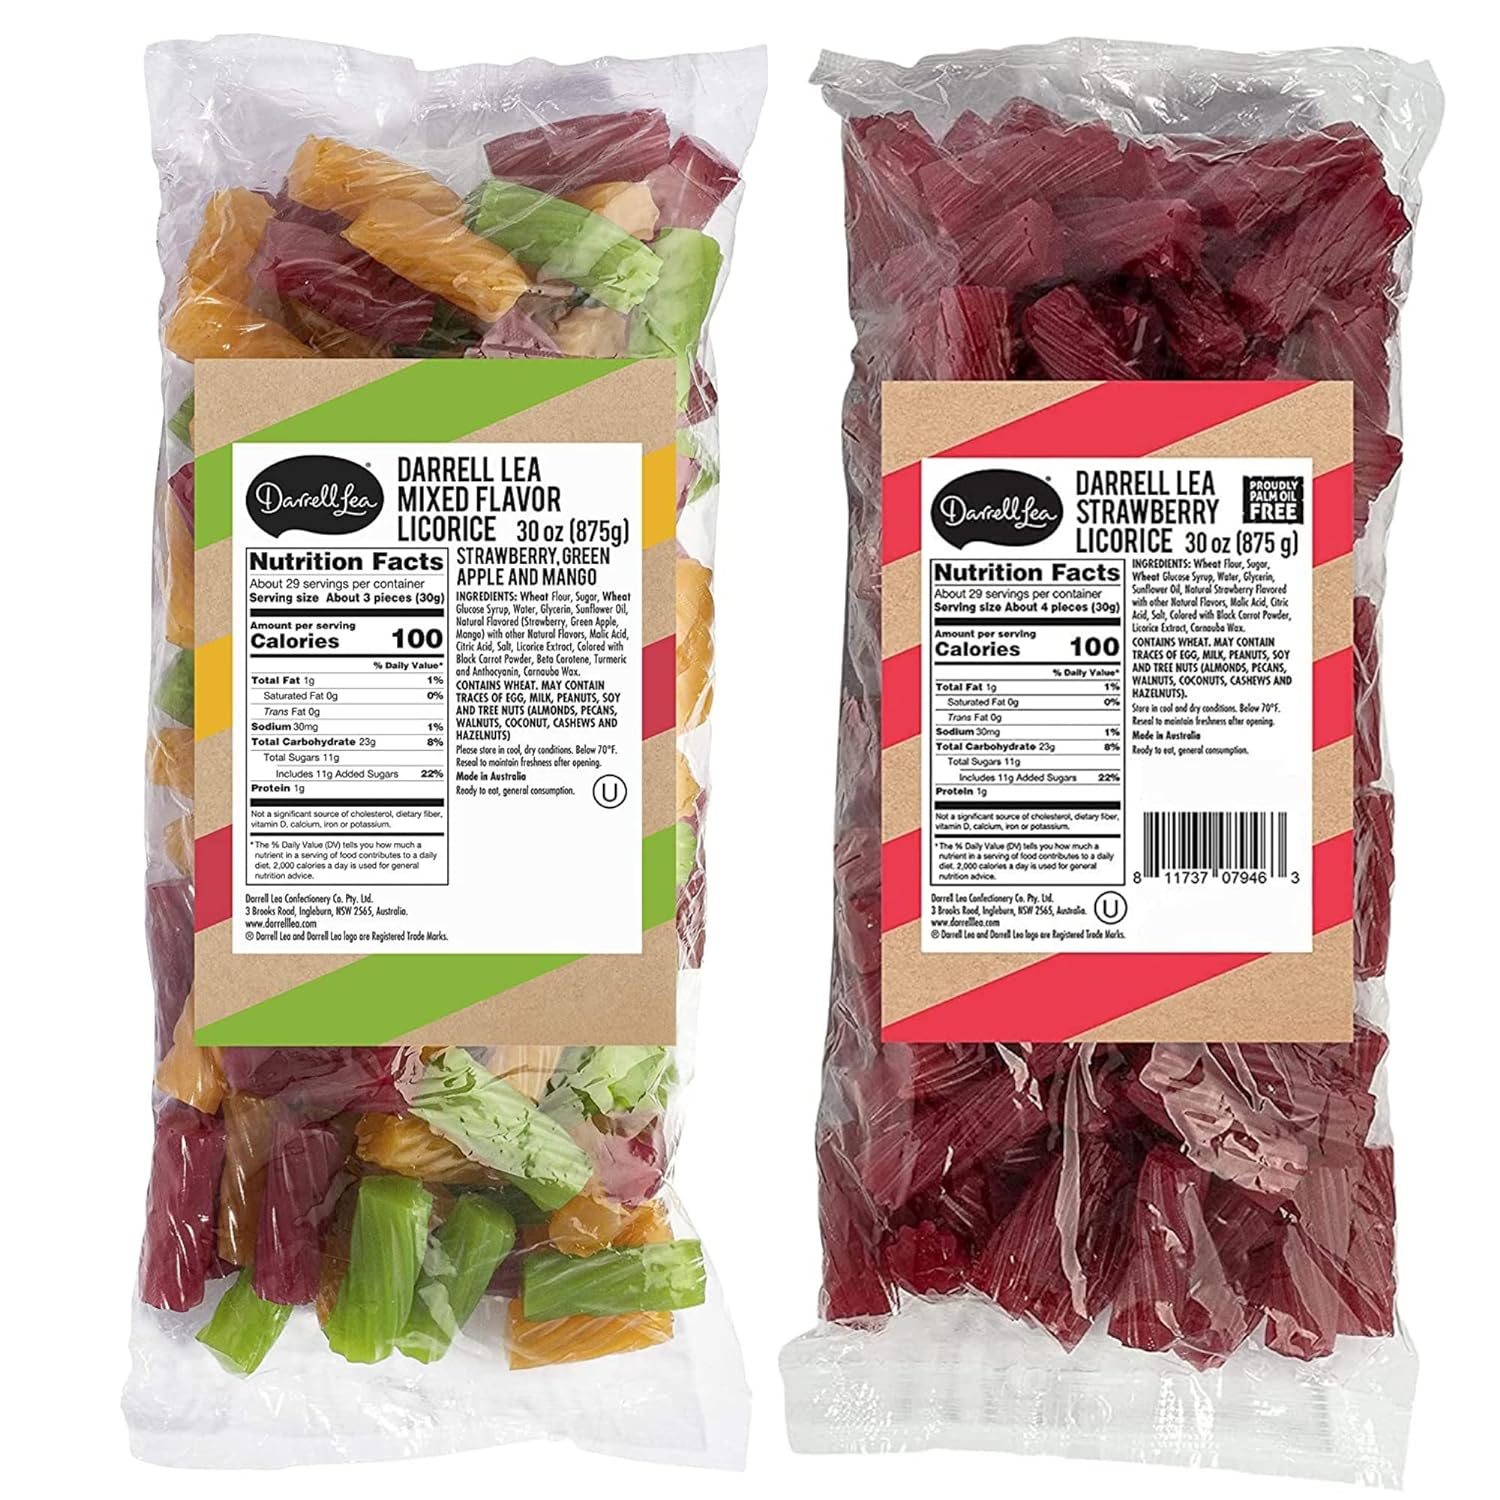 Soft Australian Strawberry Licorice and MIxed Licorice - Darrell Lea 1.925 lb Bulk Bag - NON-GMO, NO HFCS, Vegan-Friendl